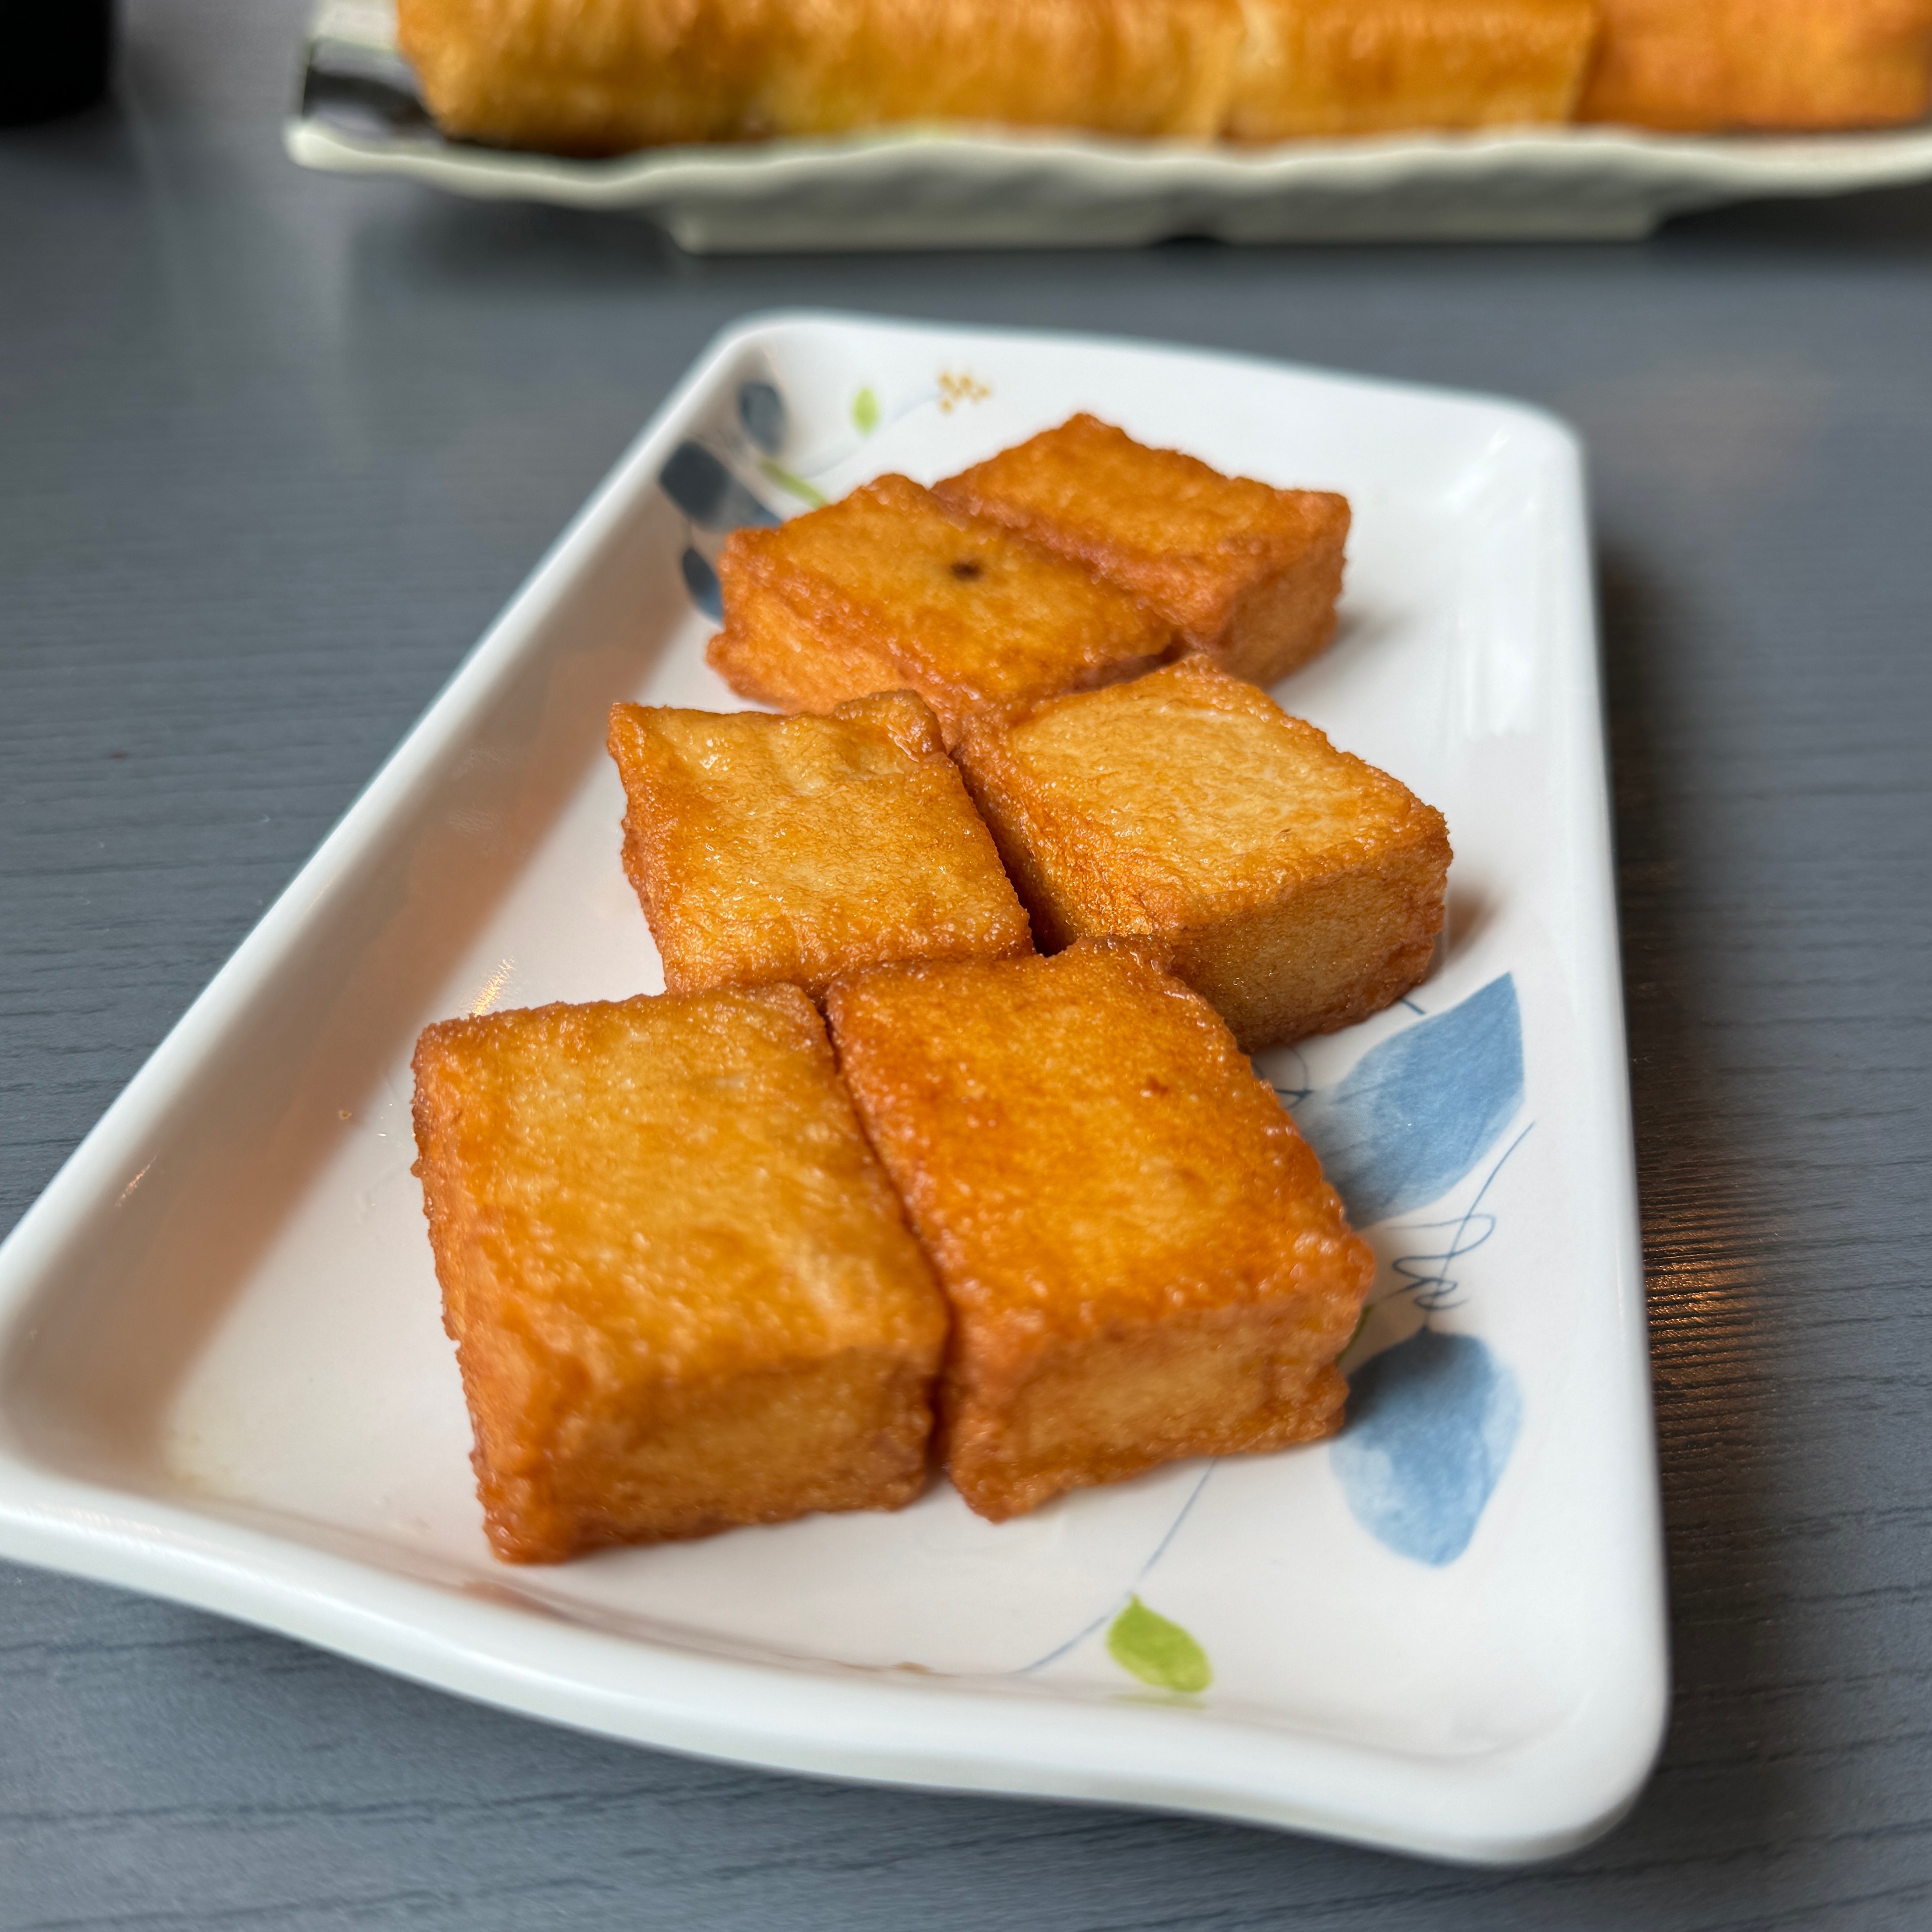 Golden Fried Fish Tofu $4.50 from Mr. Champion (冠軍) on #foodmento http://foodmento.com/dish/57768